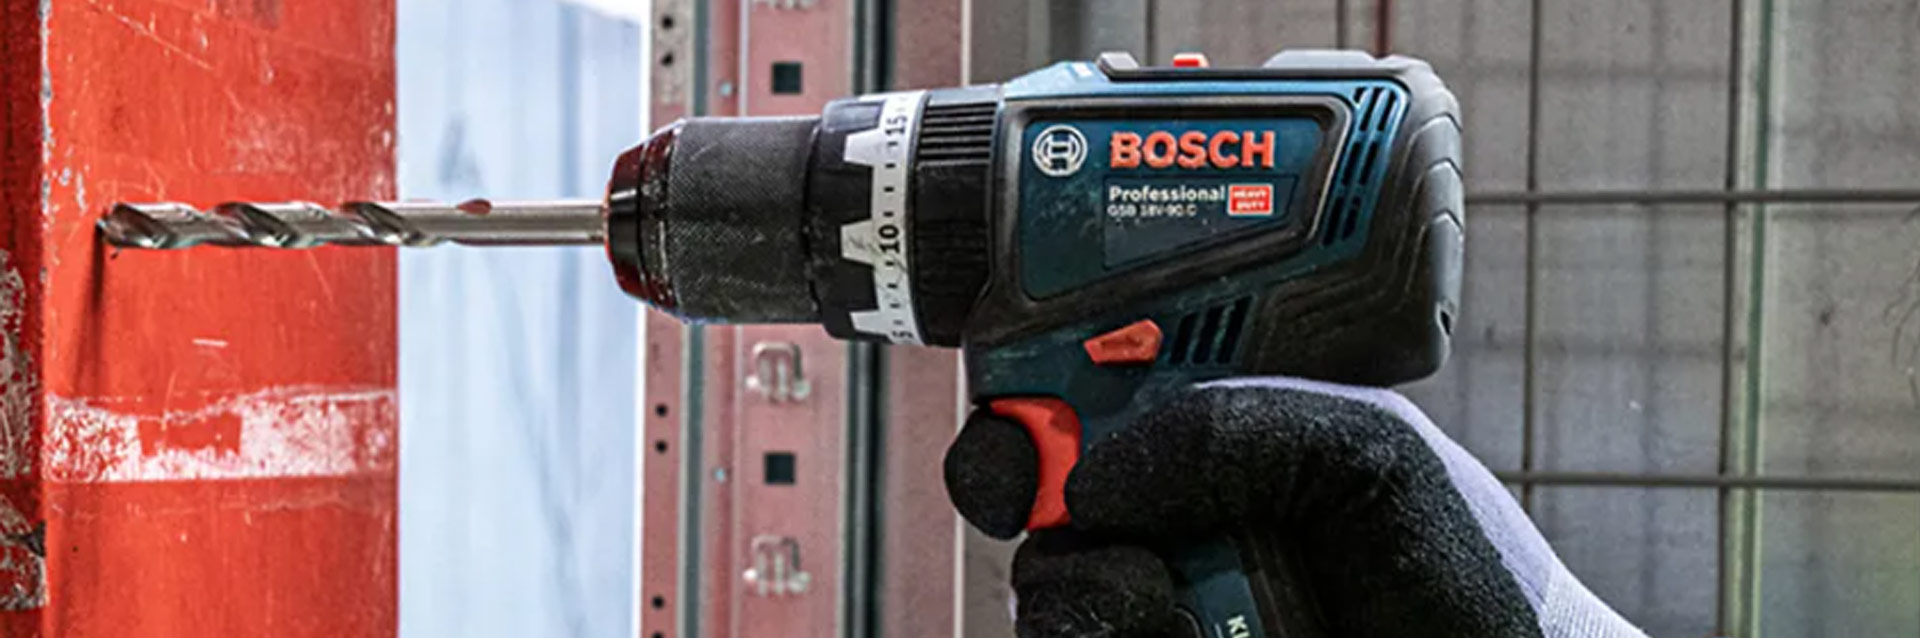 Aparafusadoras Bosch